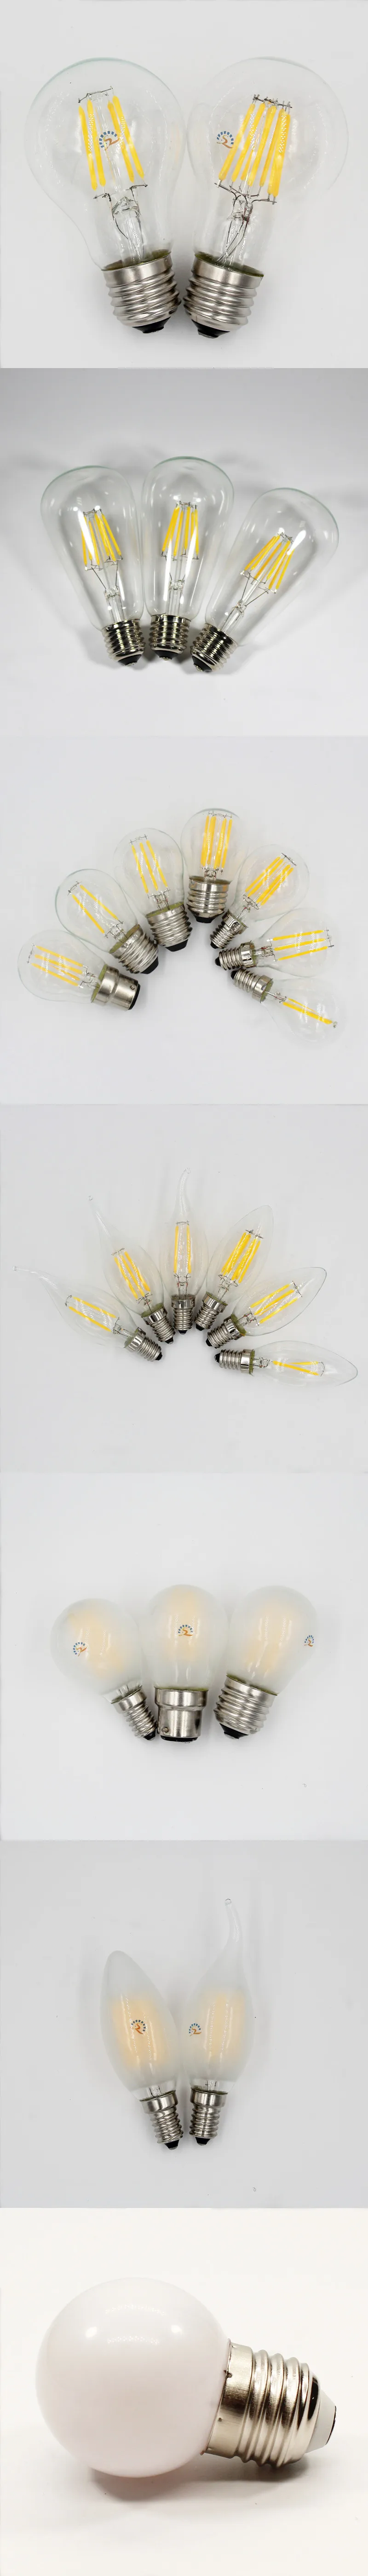 Bombillas LED de filamento